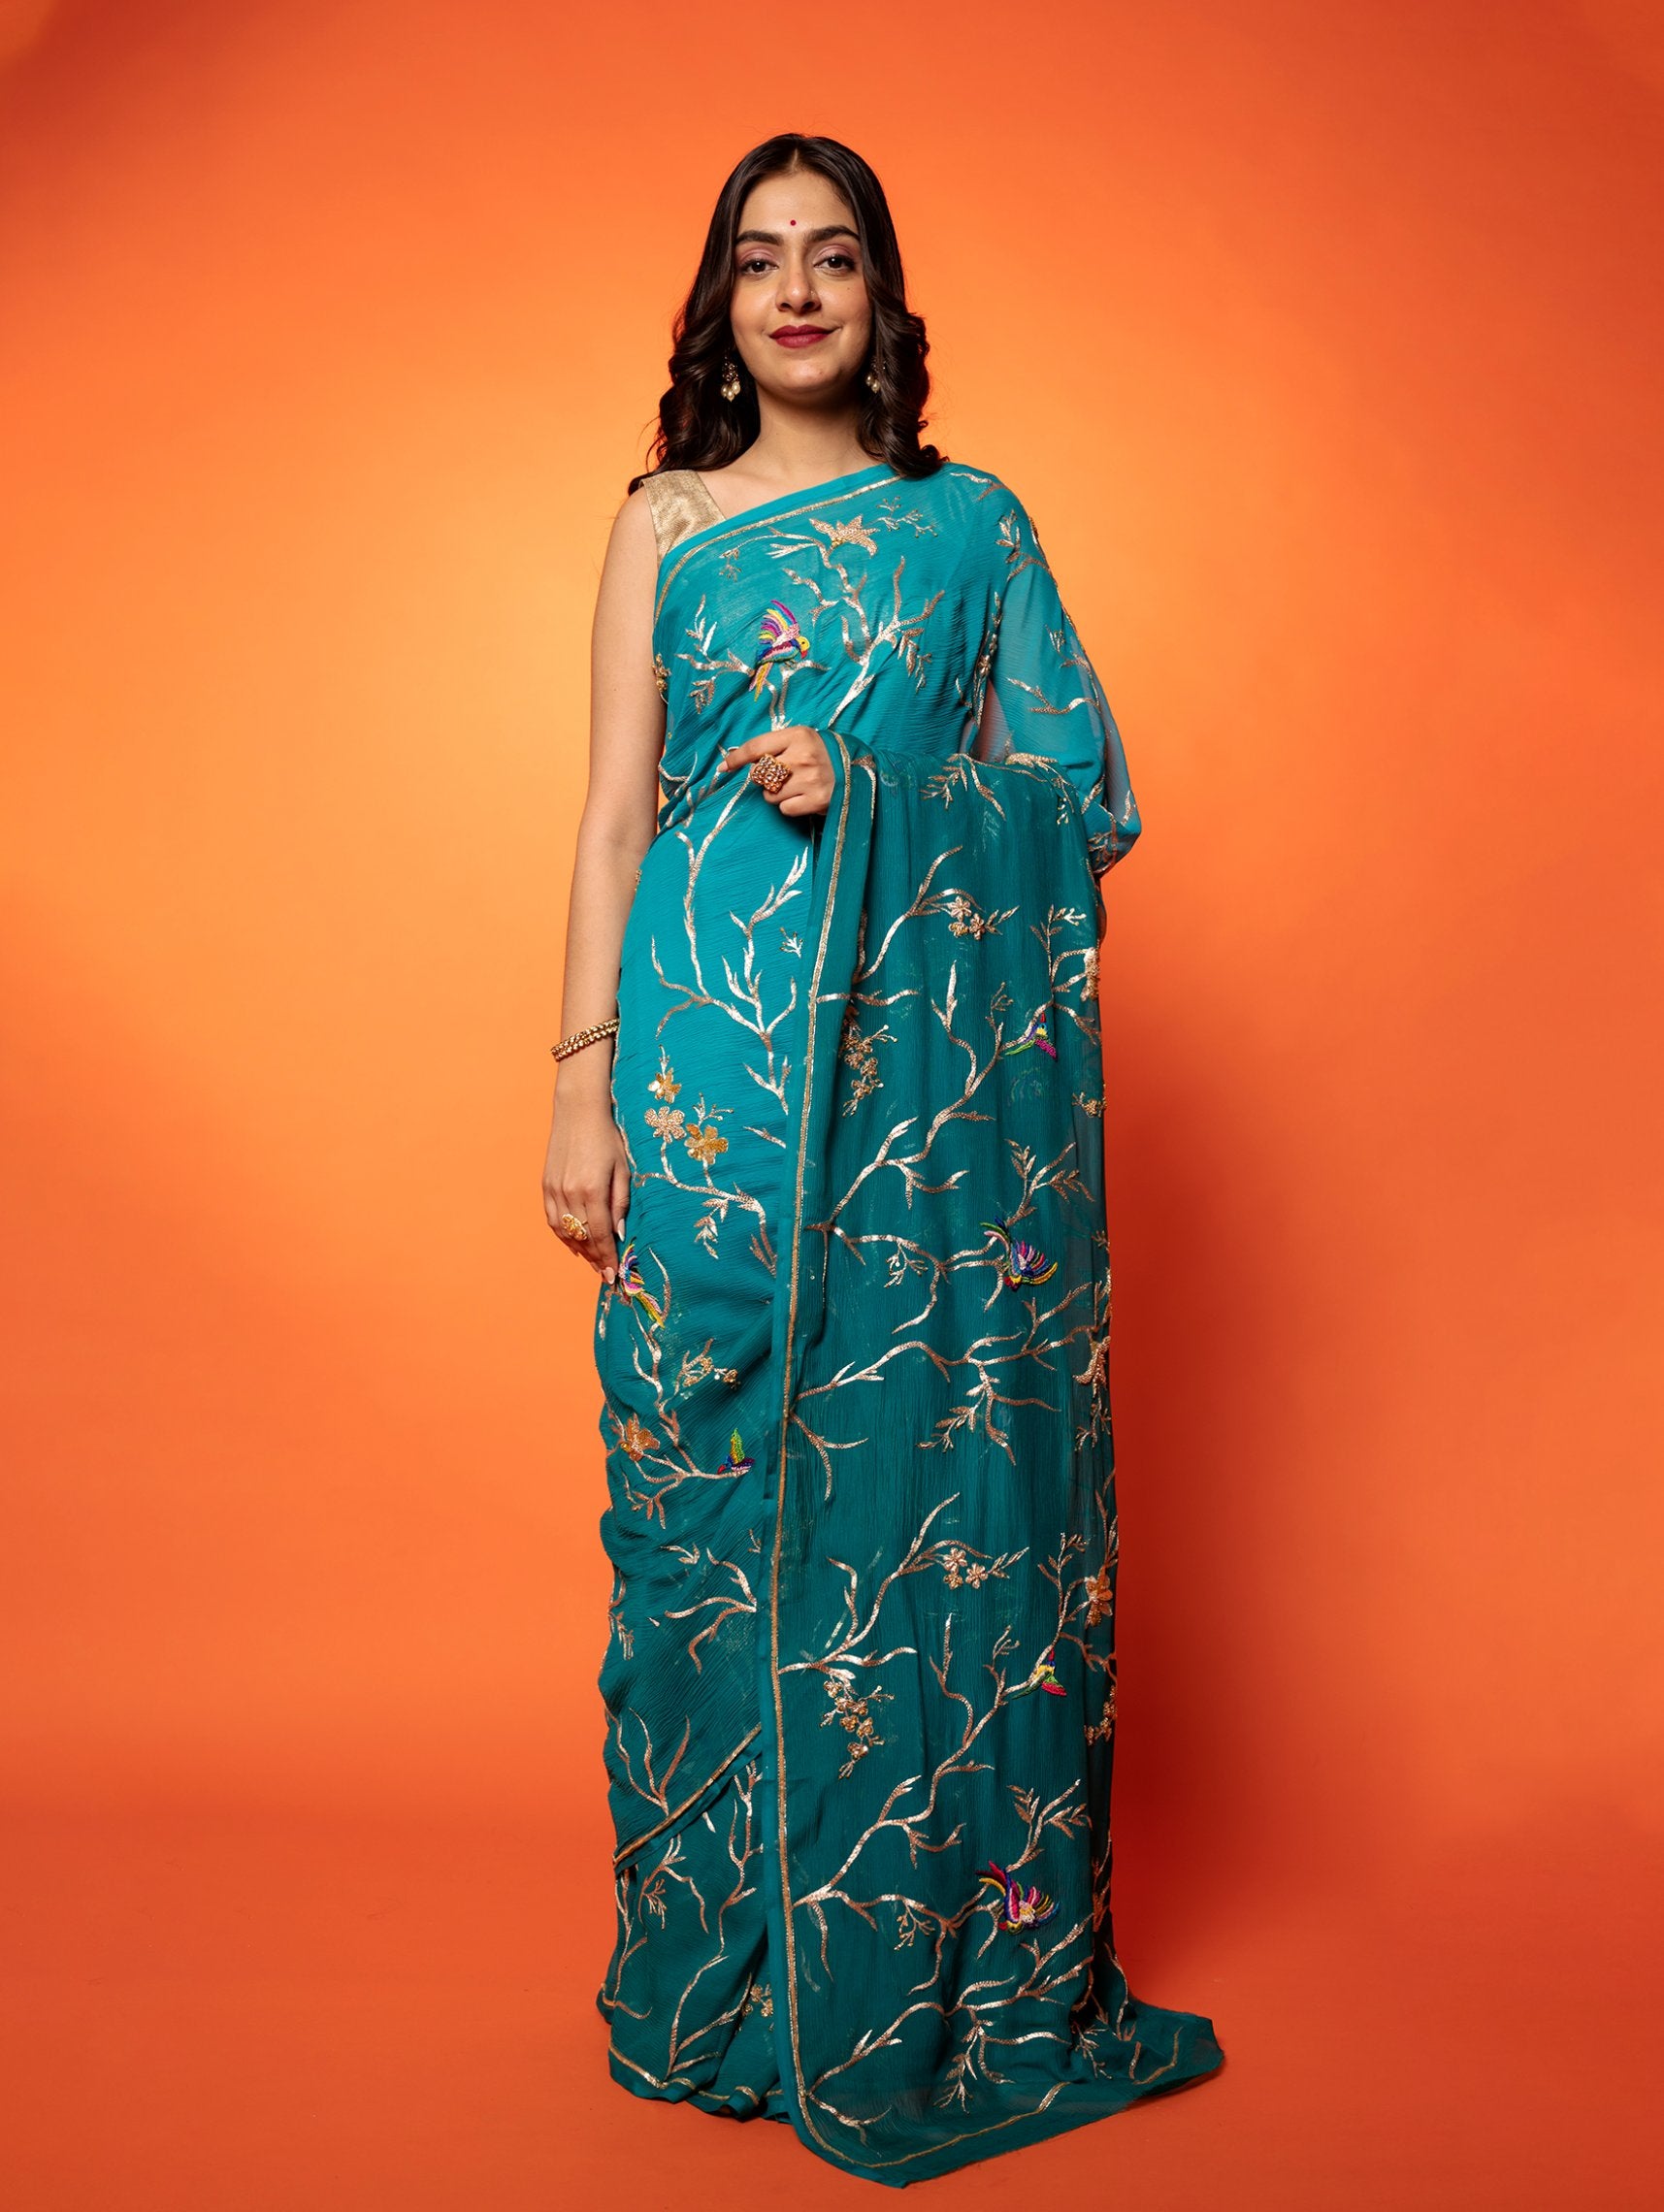  Nency Fashionwoven Design Banarasi Silk Saree / Charvi